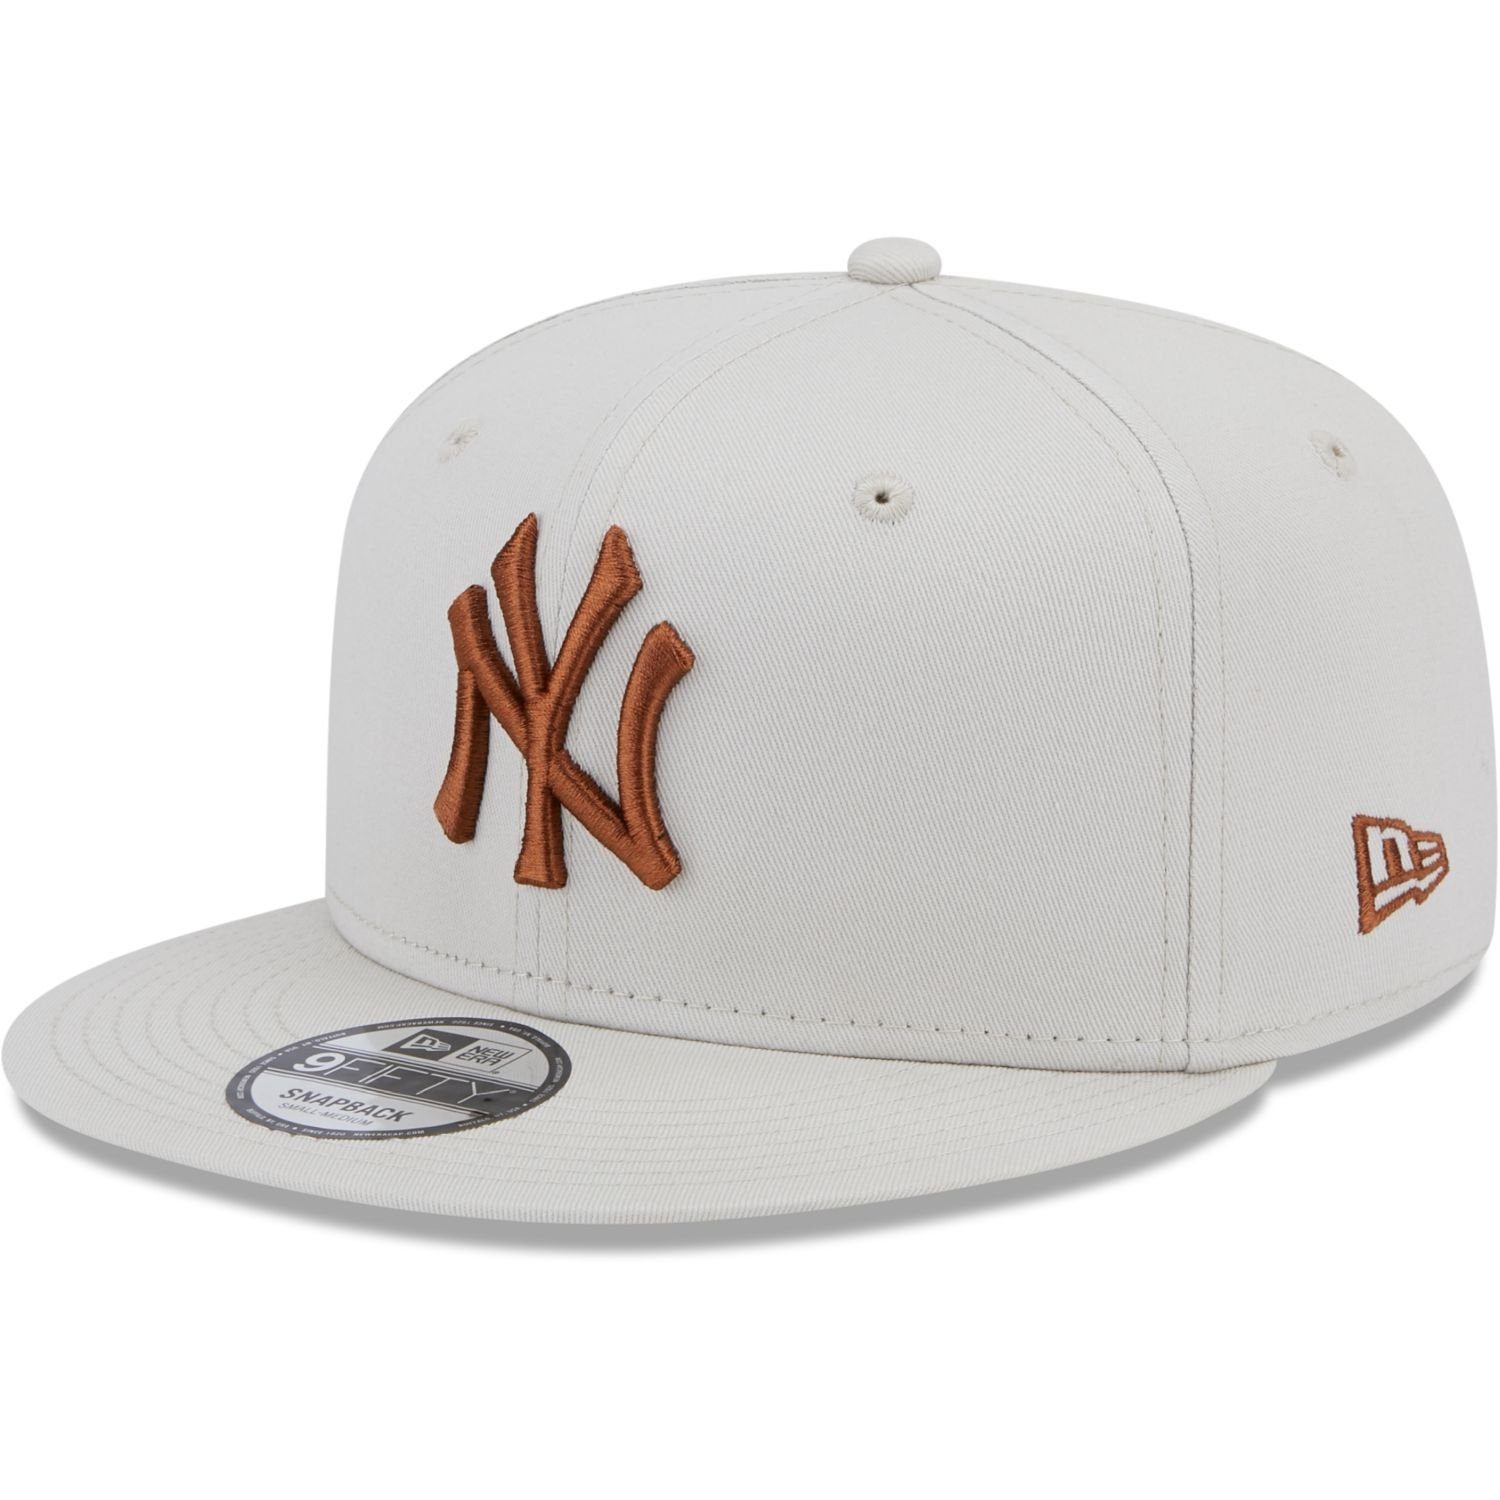 New Era Snapback Cap 9Fifty York New Yankees